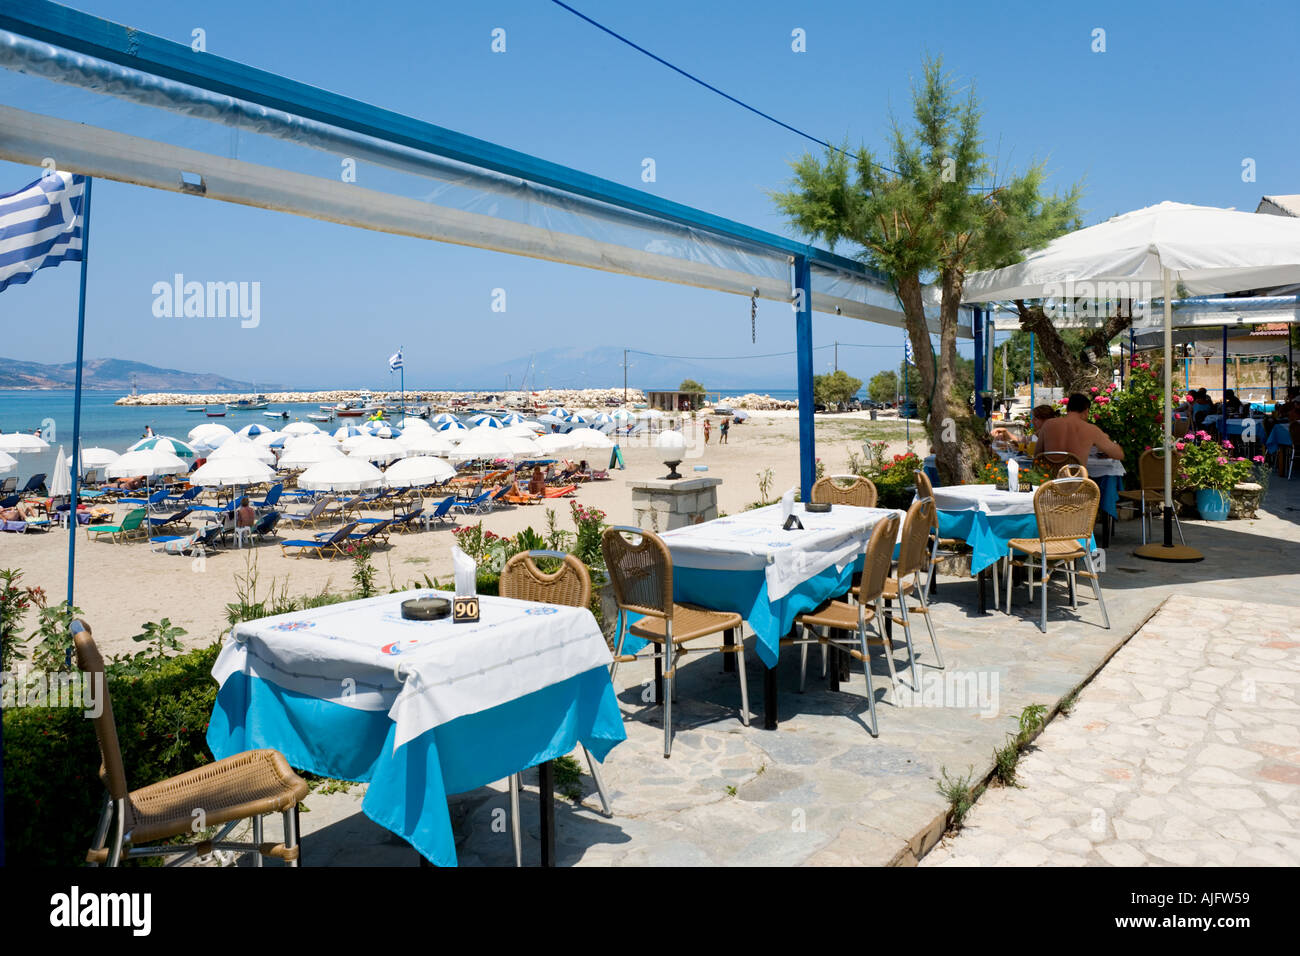 Taverne en bord de mer, Alykanas, Zante, îles Ioniennes, Grèce Banque D'Images